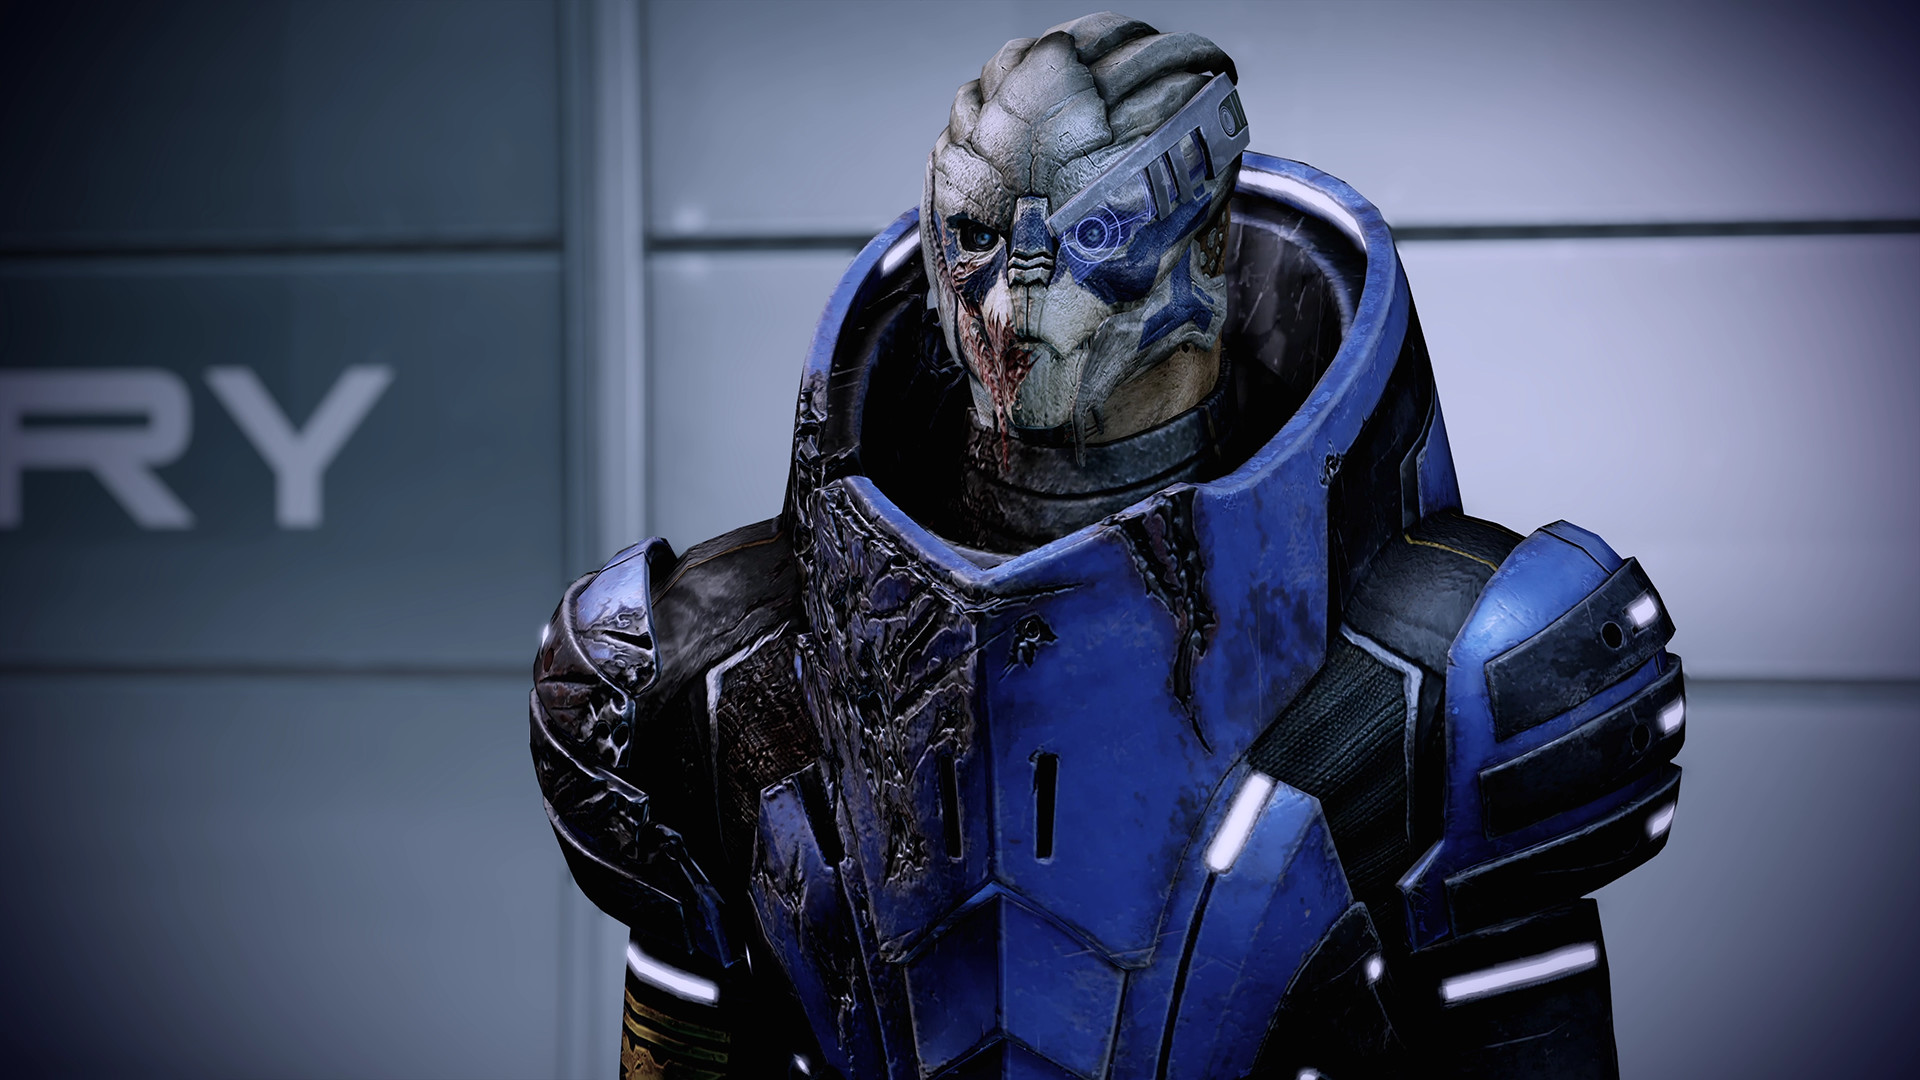 Mass Effect™ издание Legendary download the new version for ios